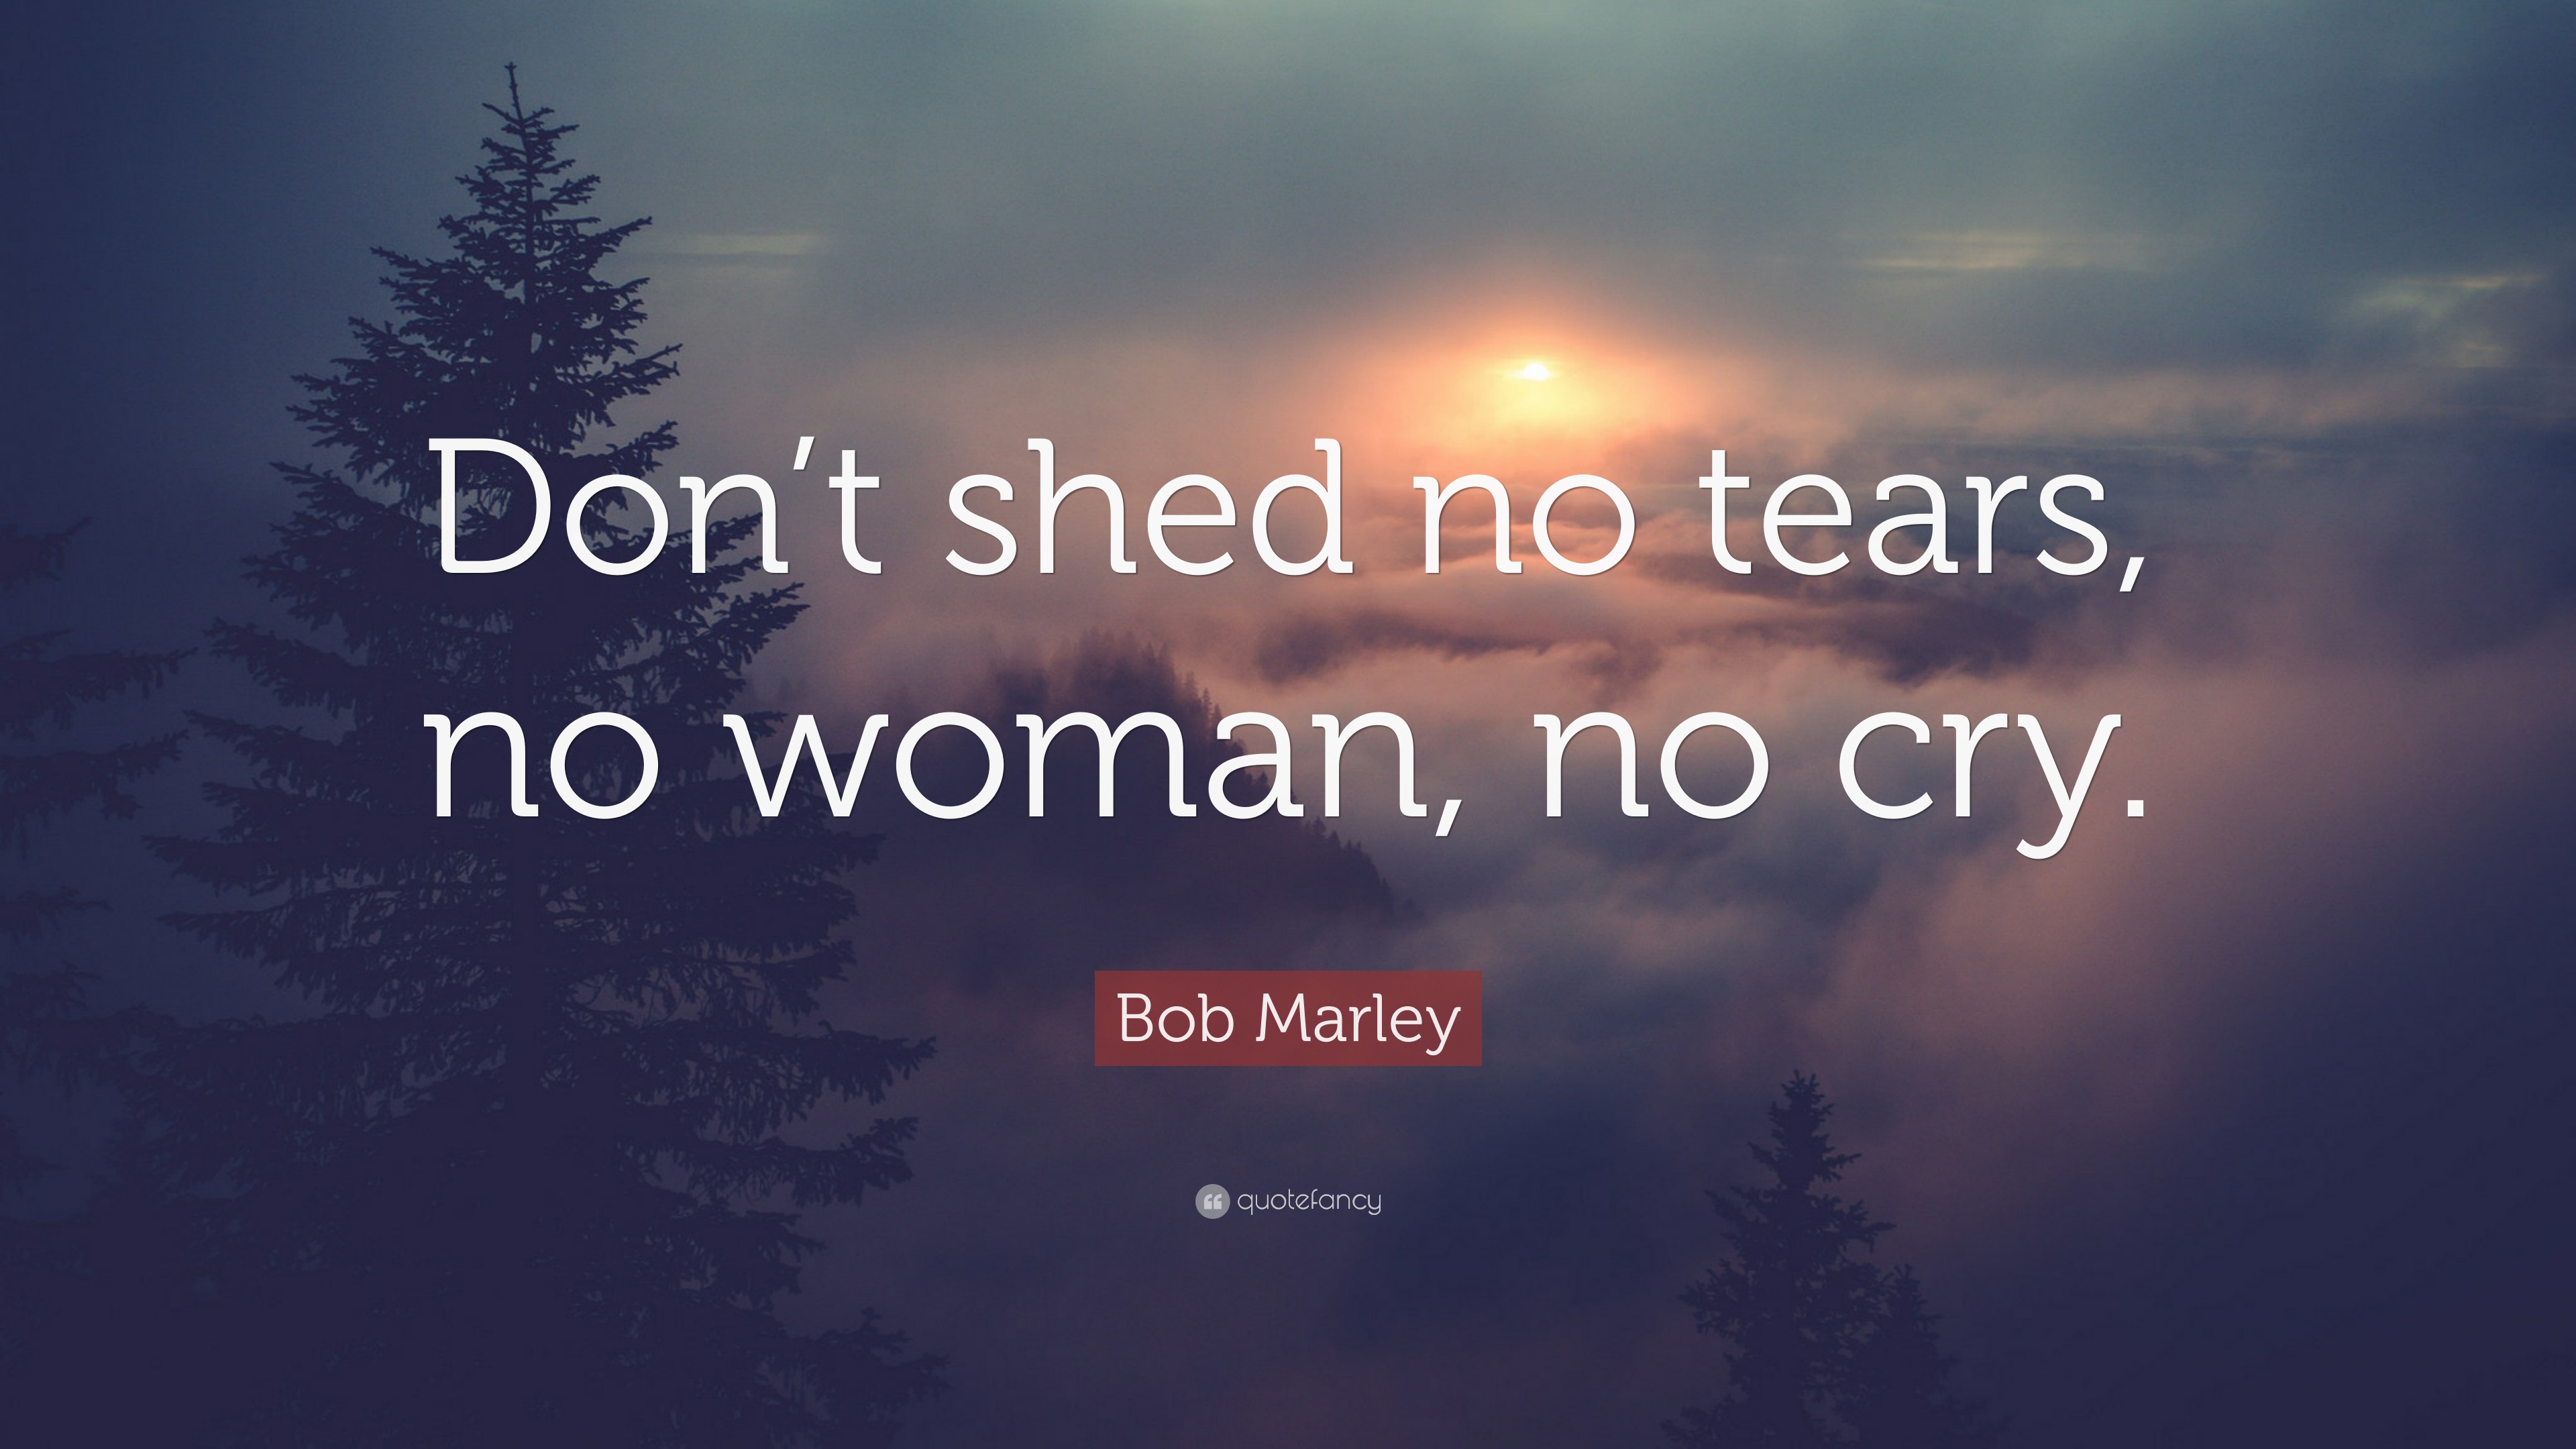 Bob Marley Quote: “Don't Shed No Tears, No Woman, No Cry.”